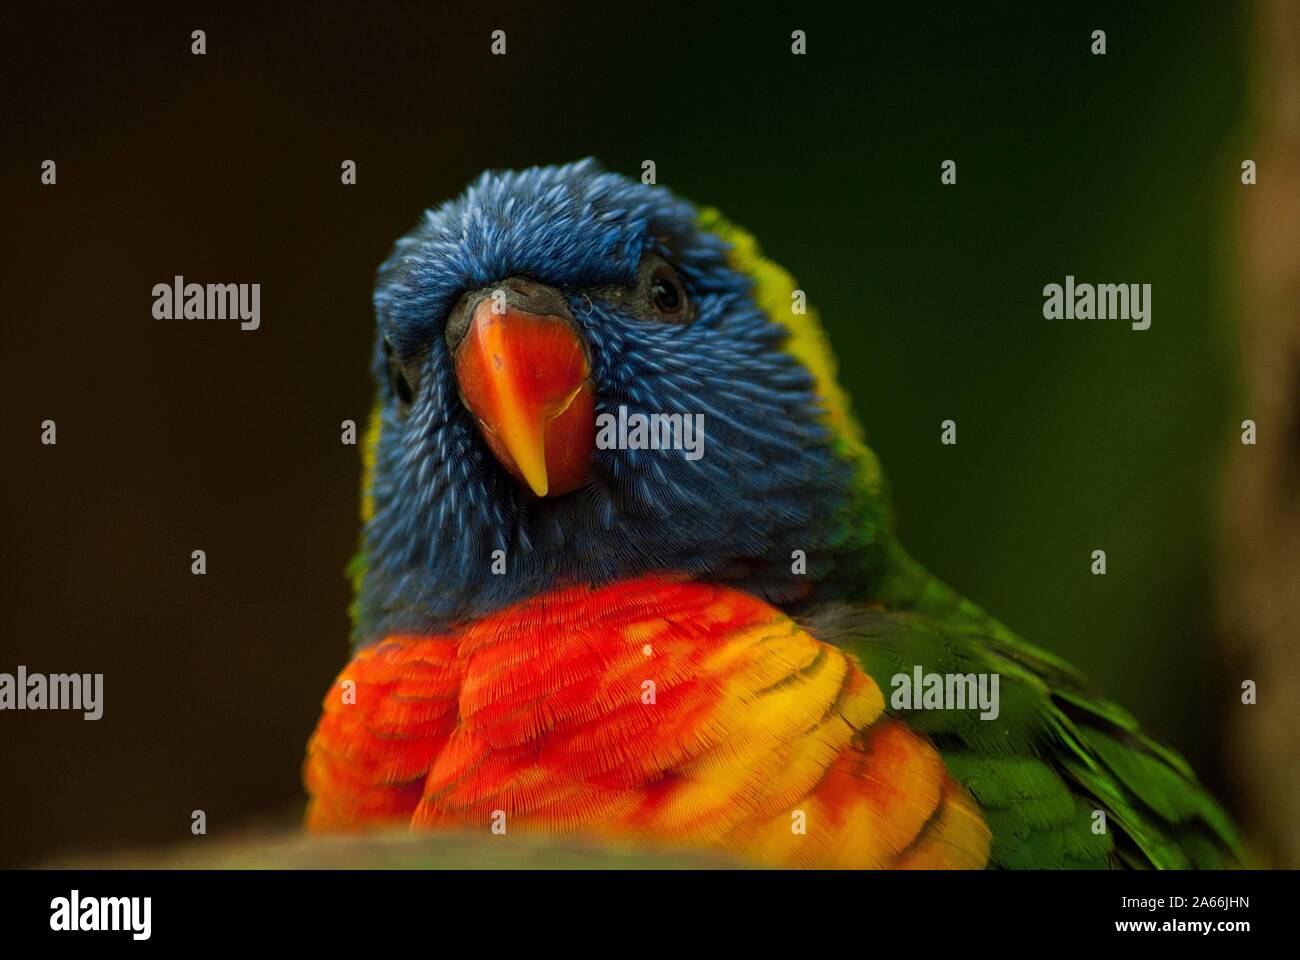 Bird portrait Stock Photo